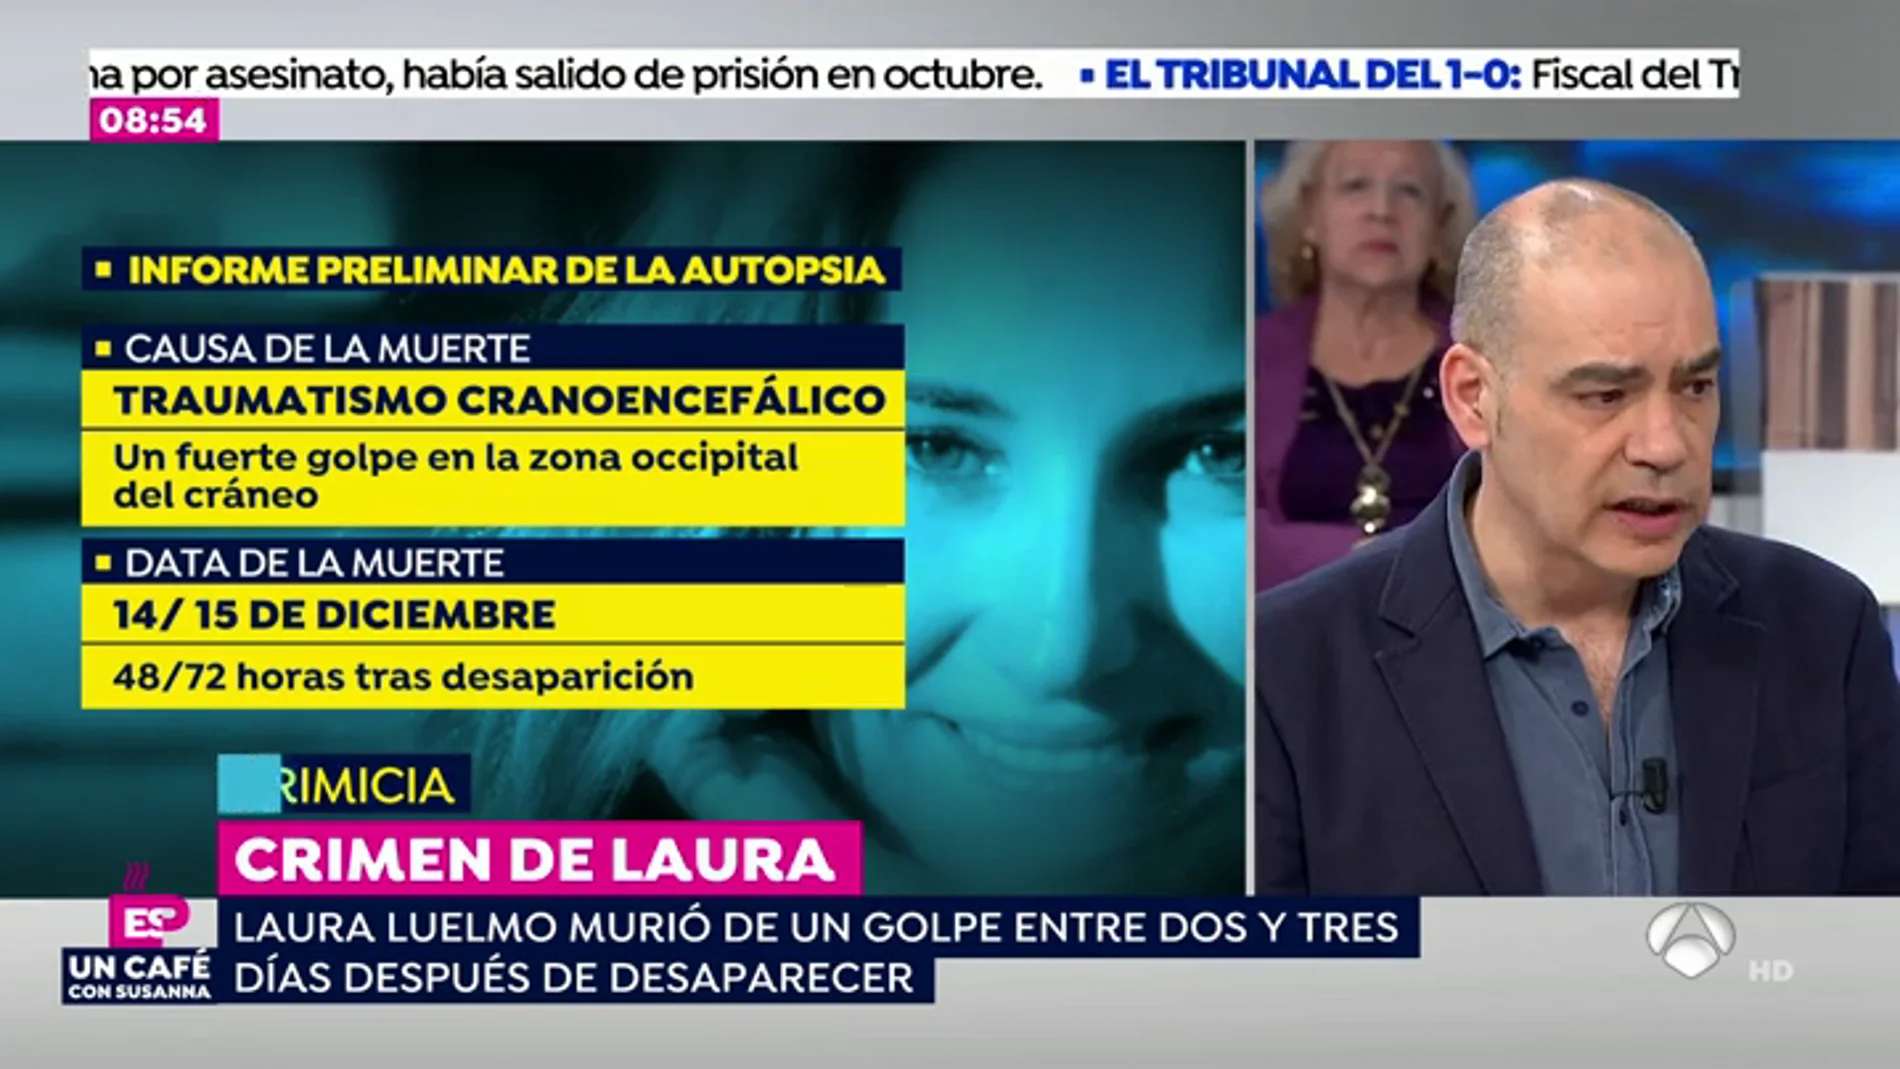 Laura Luelmo murió 3 días después de desaparecer.